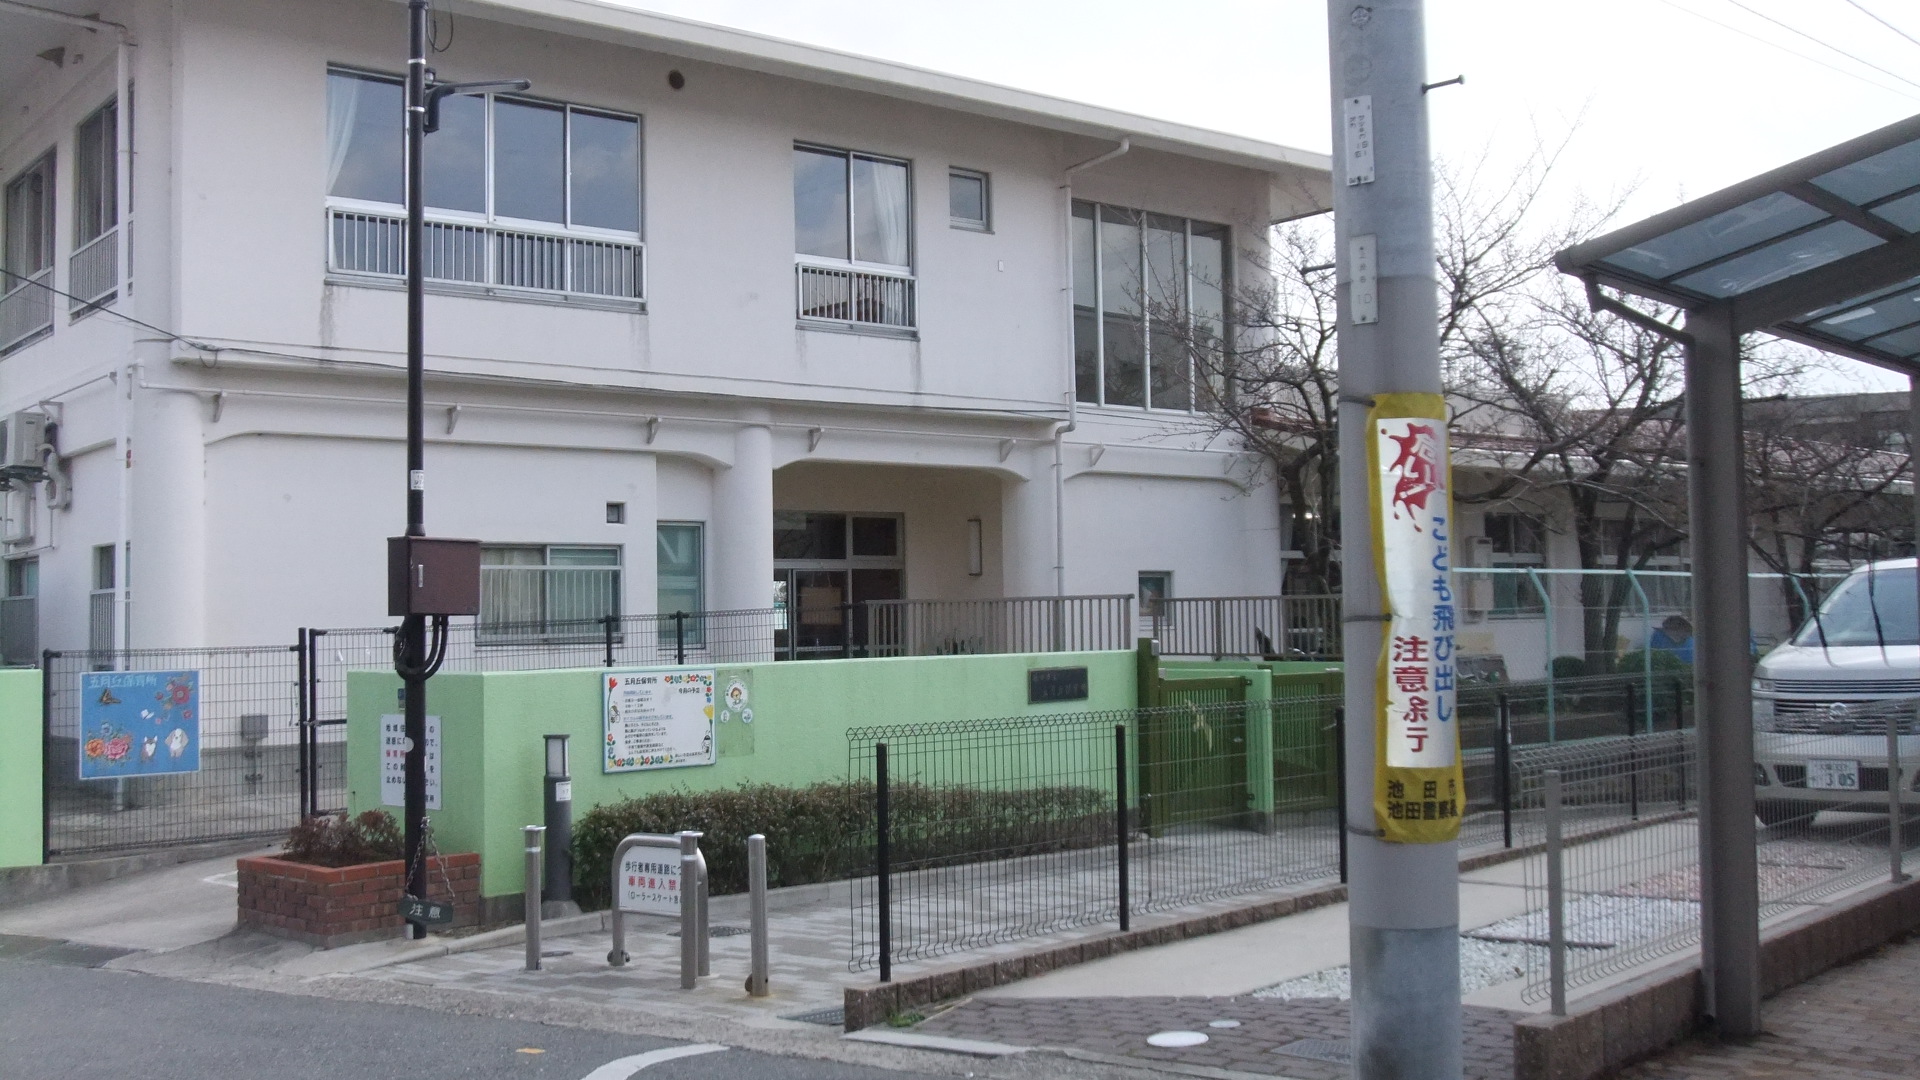 kindergarten ・ Nursery. Municipal Satsukigaoka nursery school (kindergarten ・ 168m to the nursery)